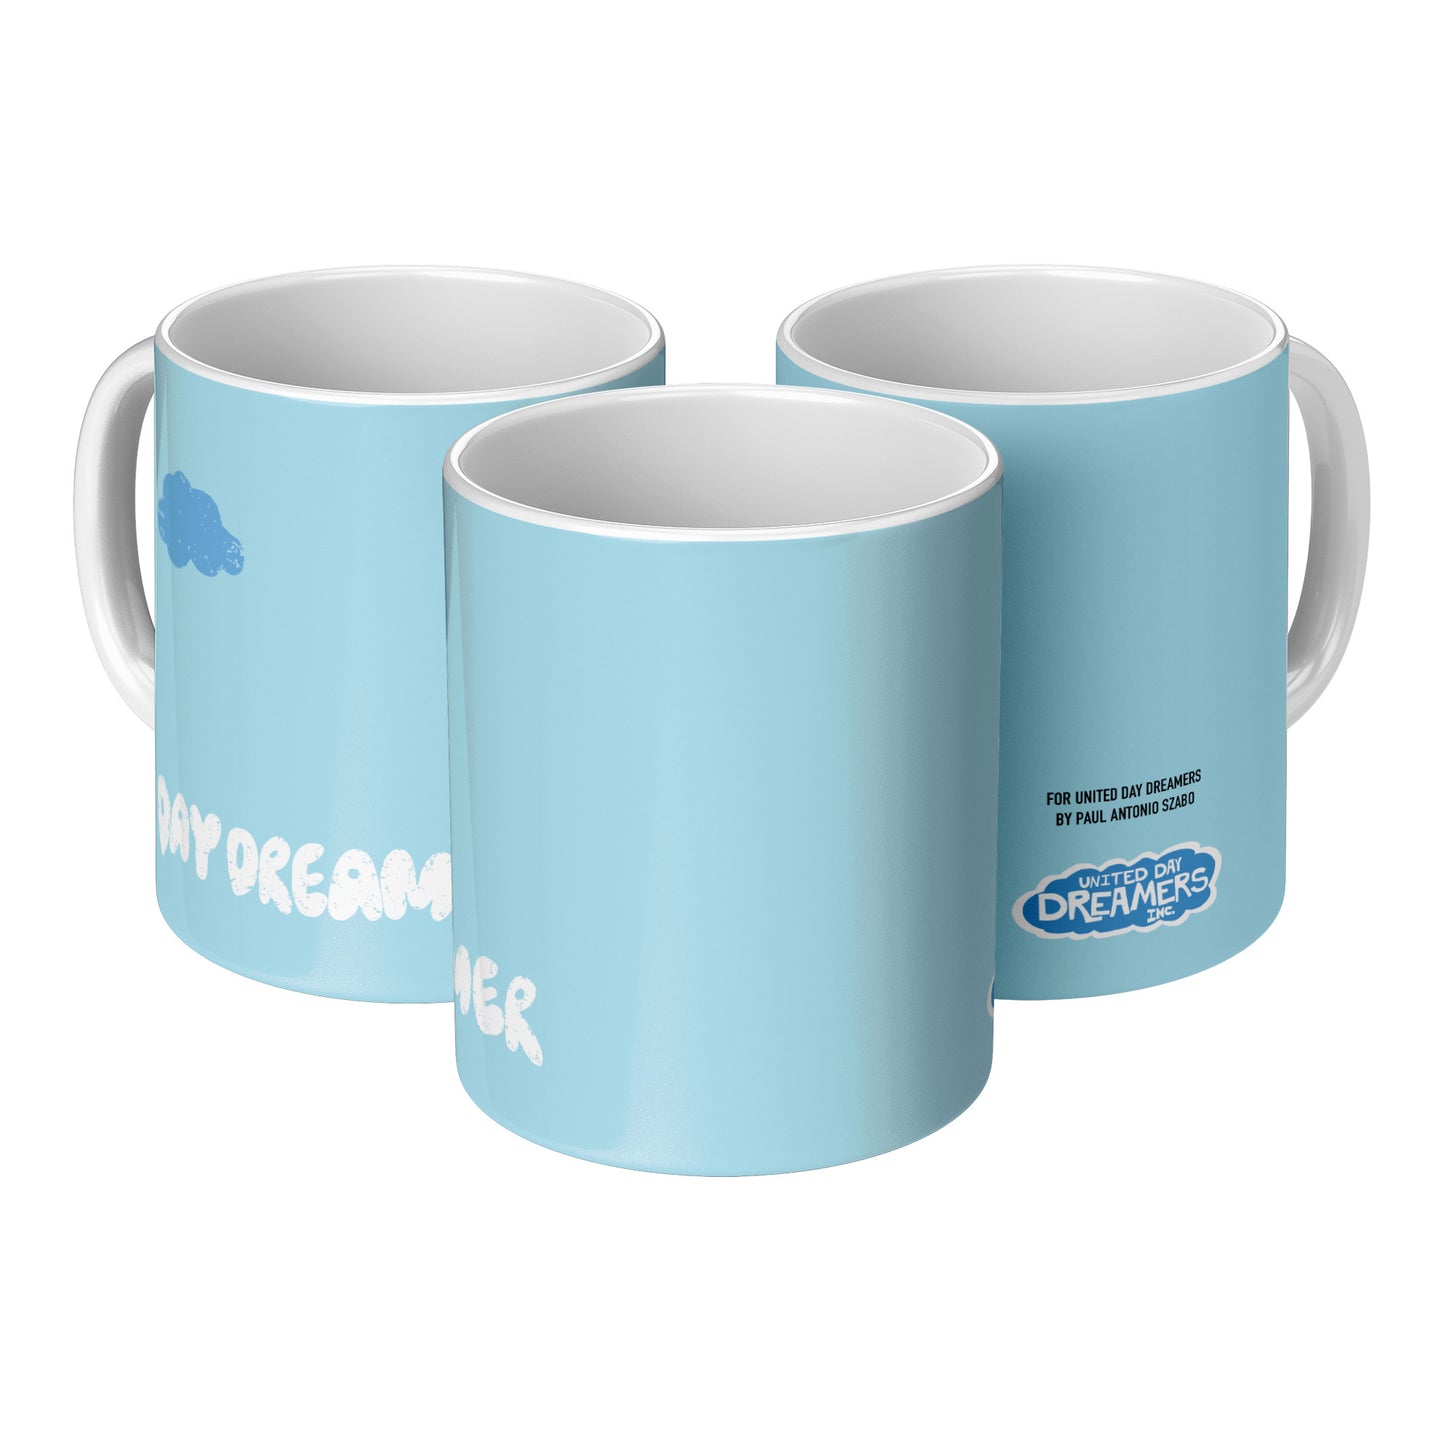 Day Dreamer Blue Mug